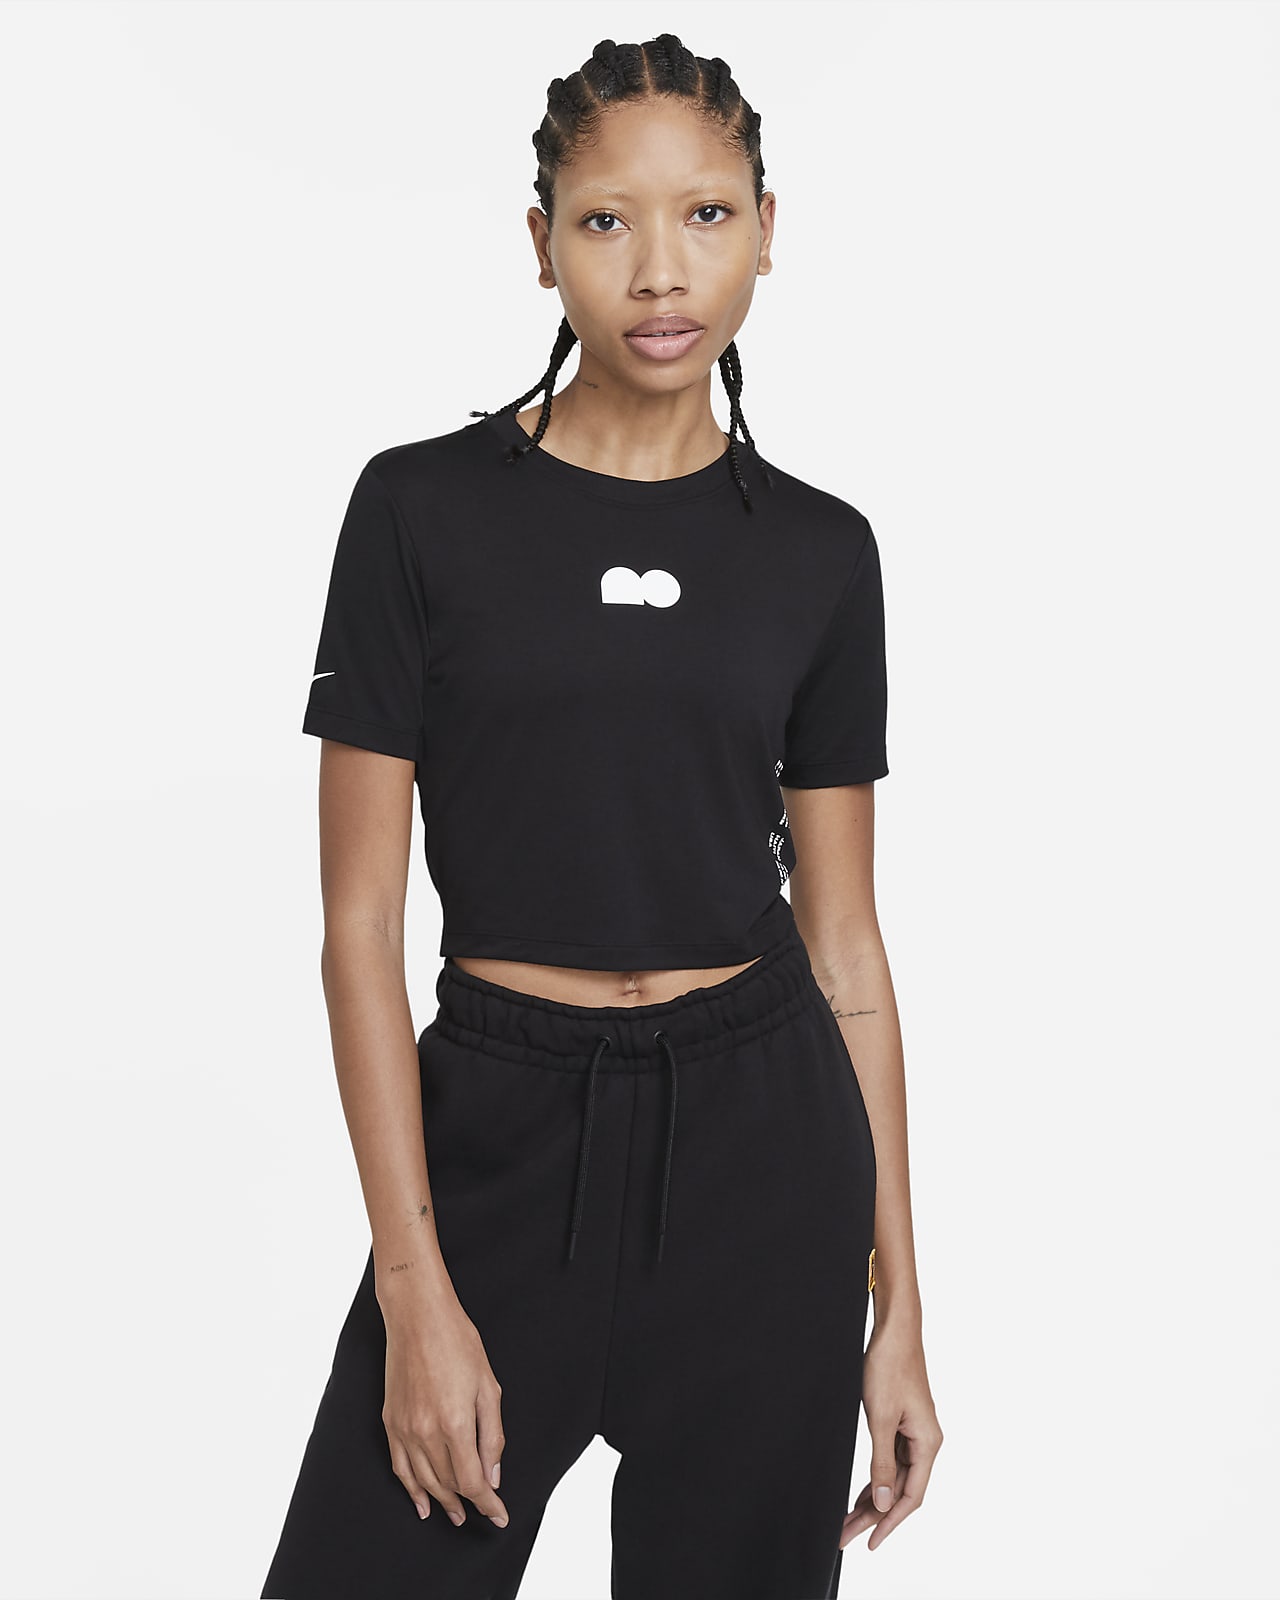 Naomi Osaka Cropped Tennis T Shirt Nike Ca